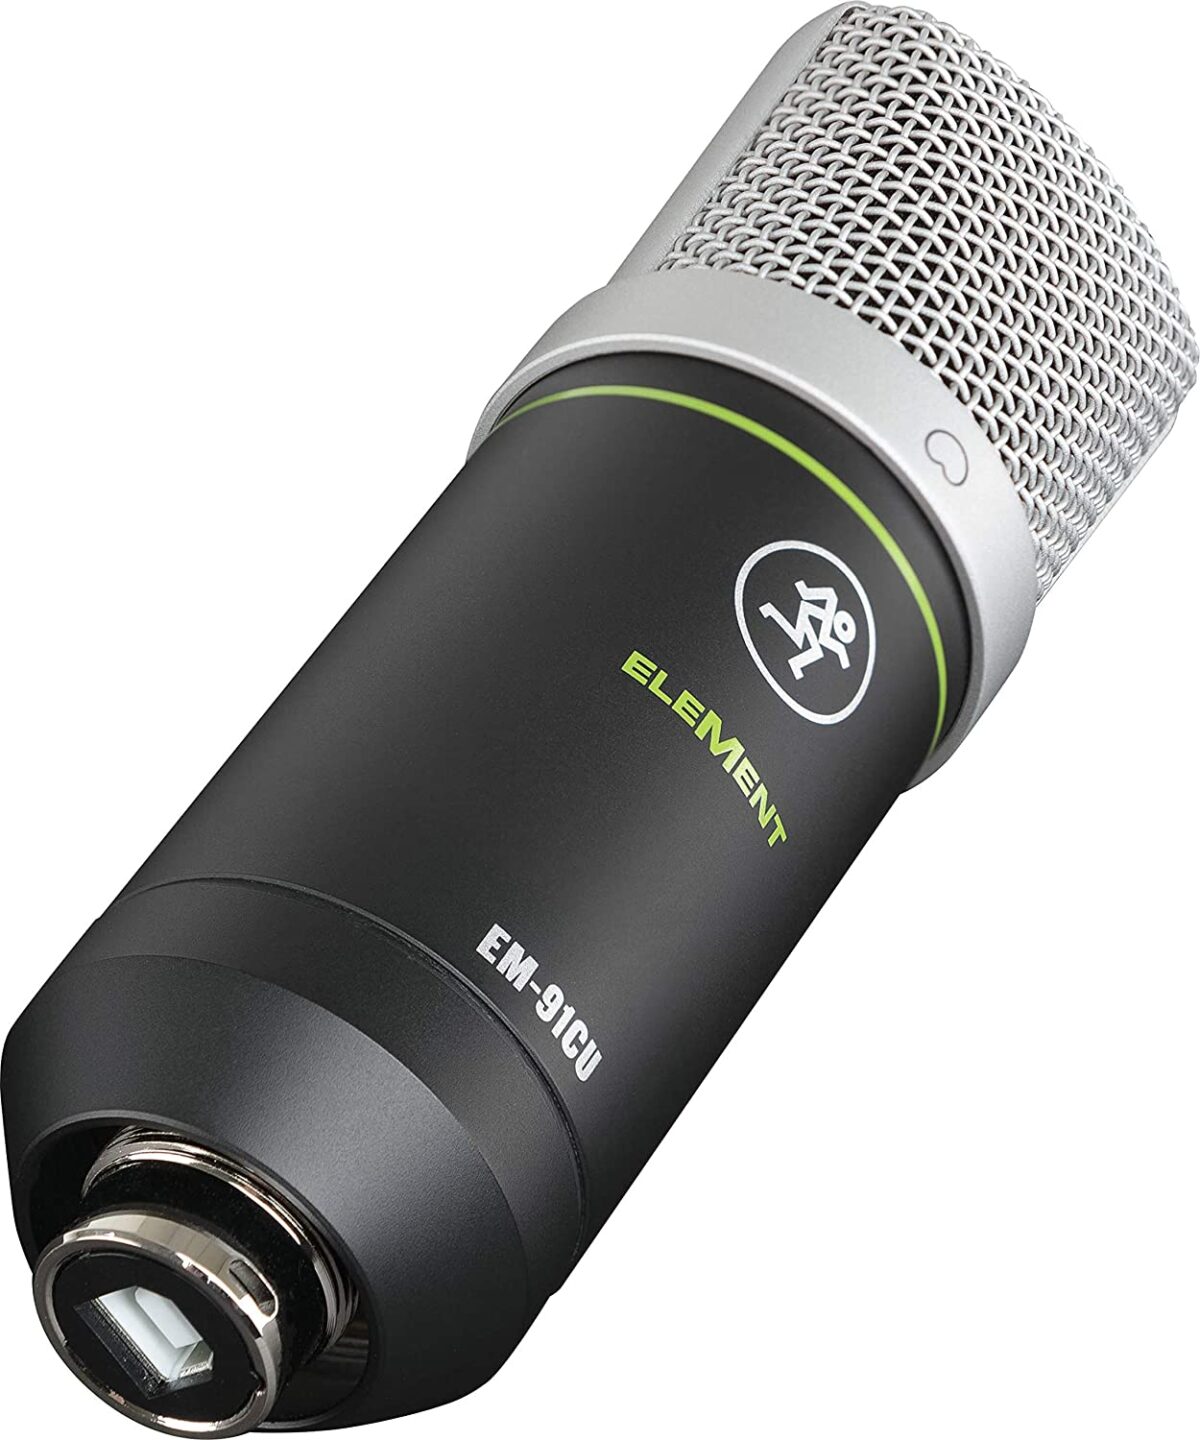 MACKIE EM-91CU USB Condenser Microphone Includes Shockmount, USB Cable & 16 Exclusive Plugins